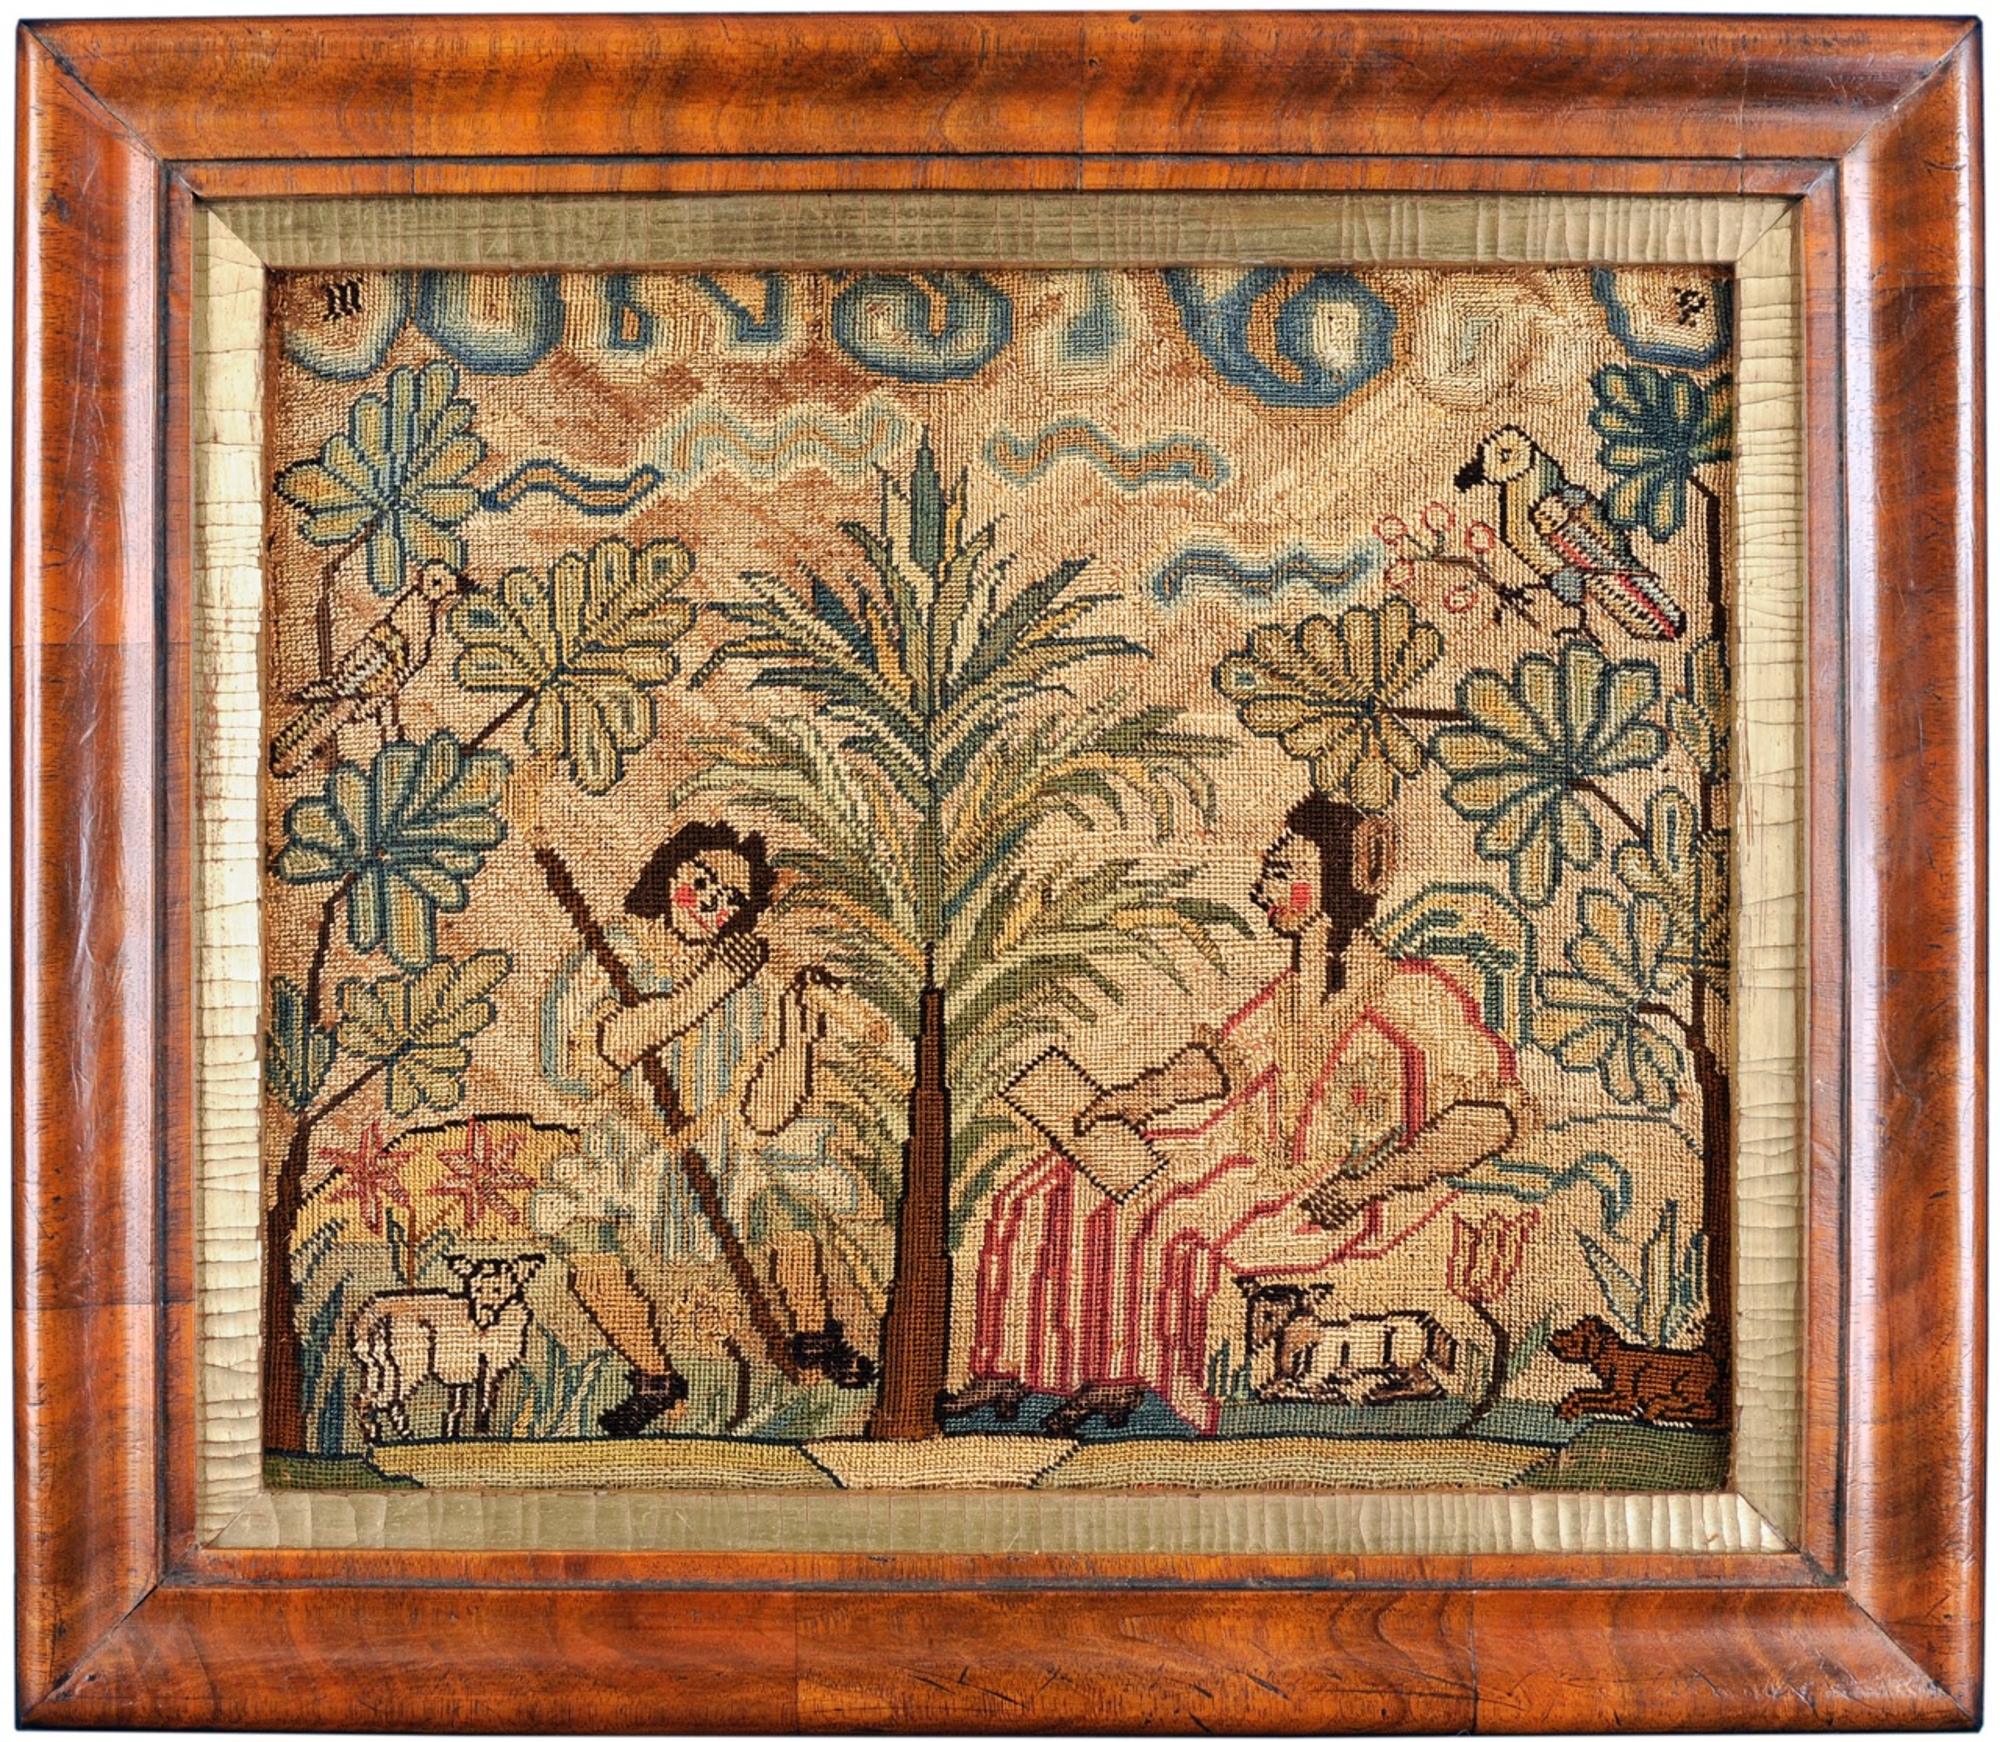 Needlework Panel. Mid 18th Century